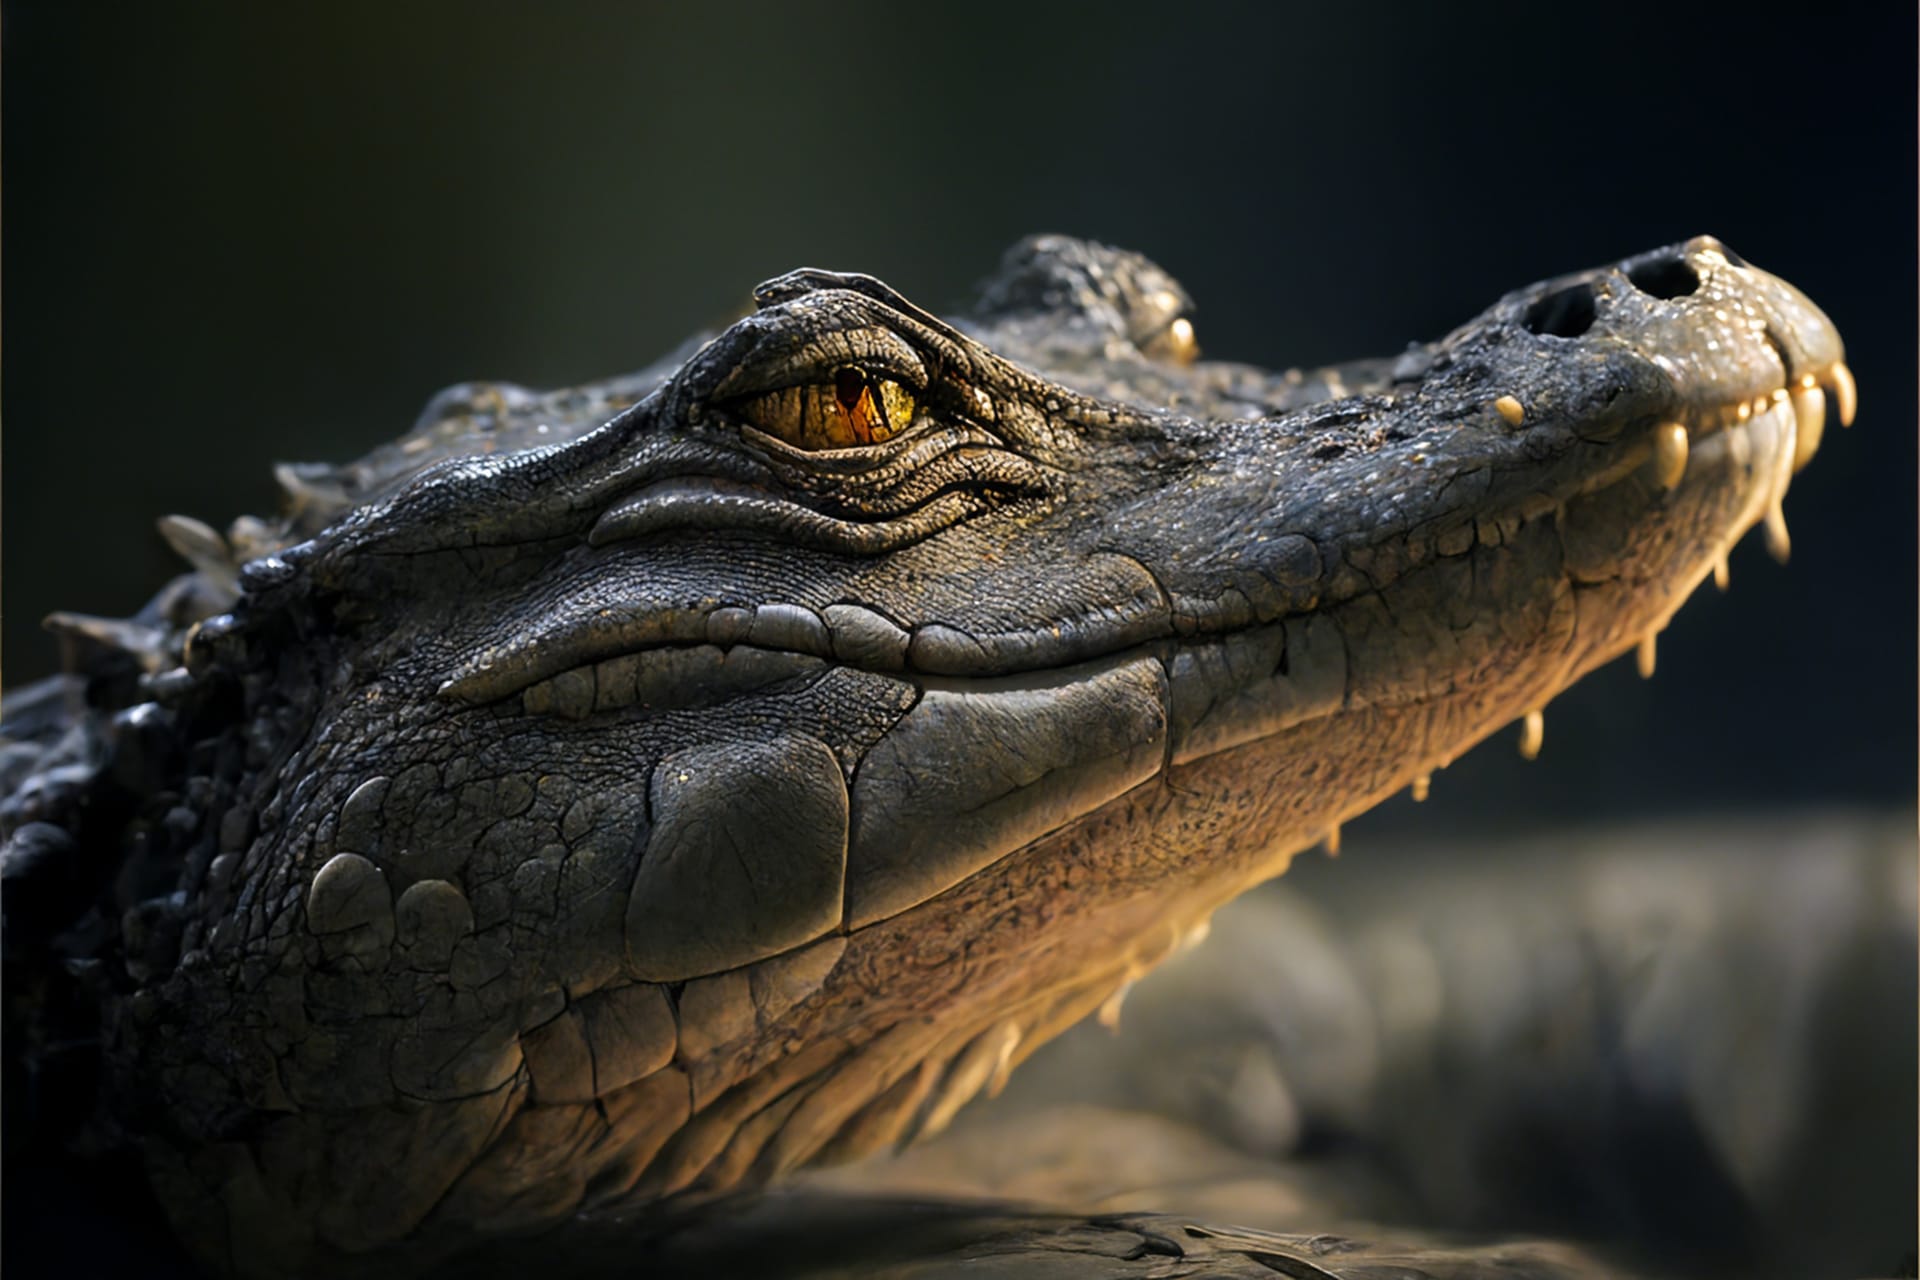 Realistic crocodile close up portrait